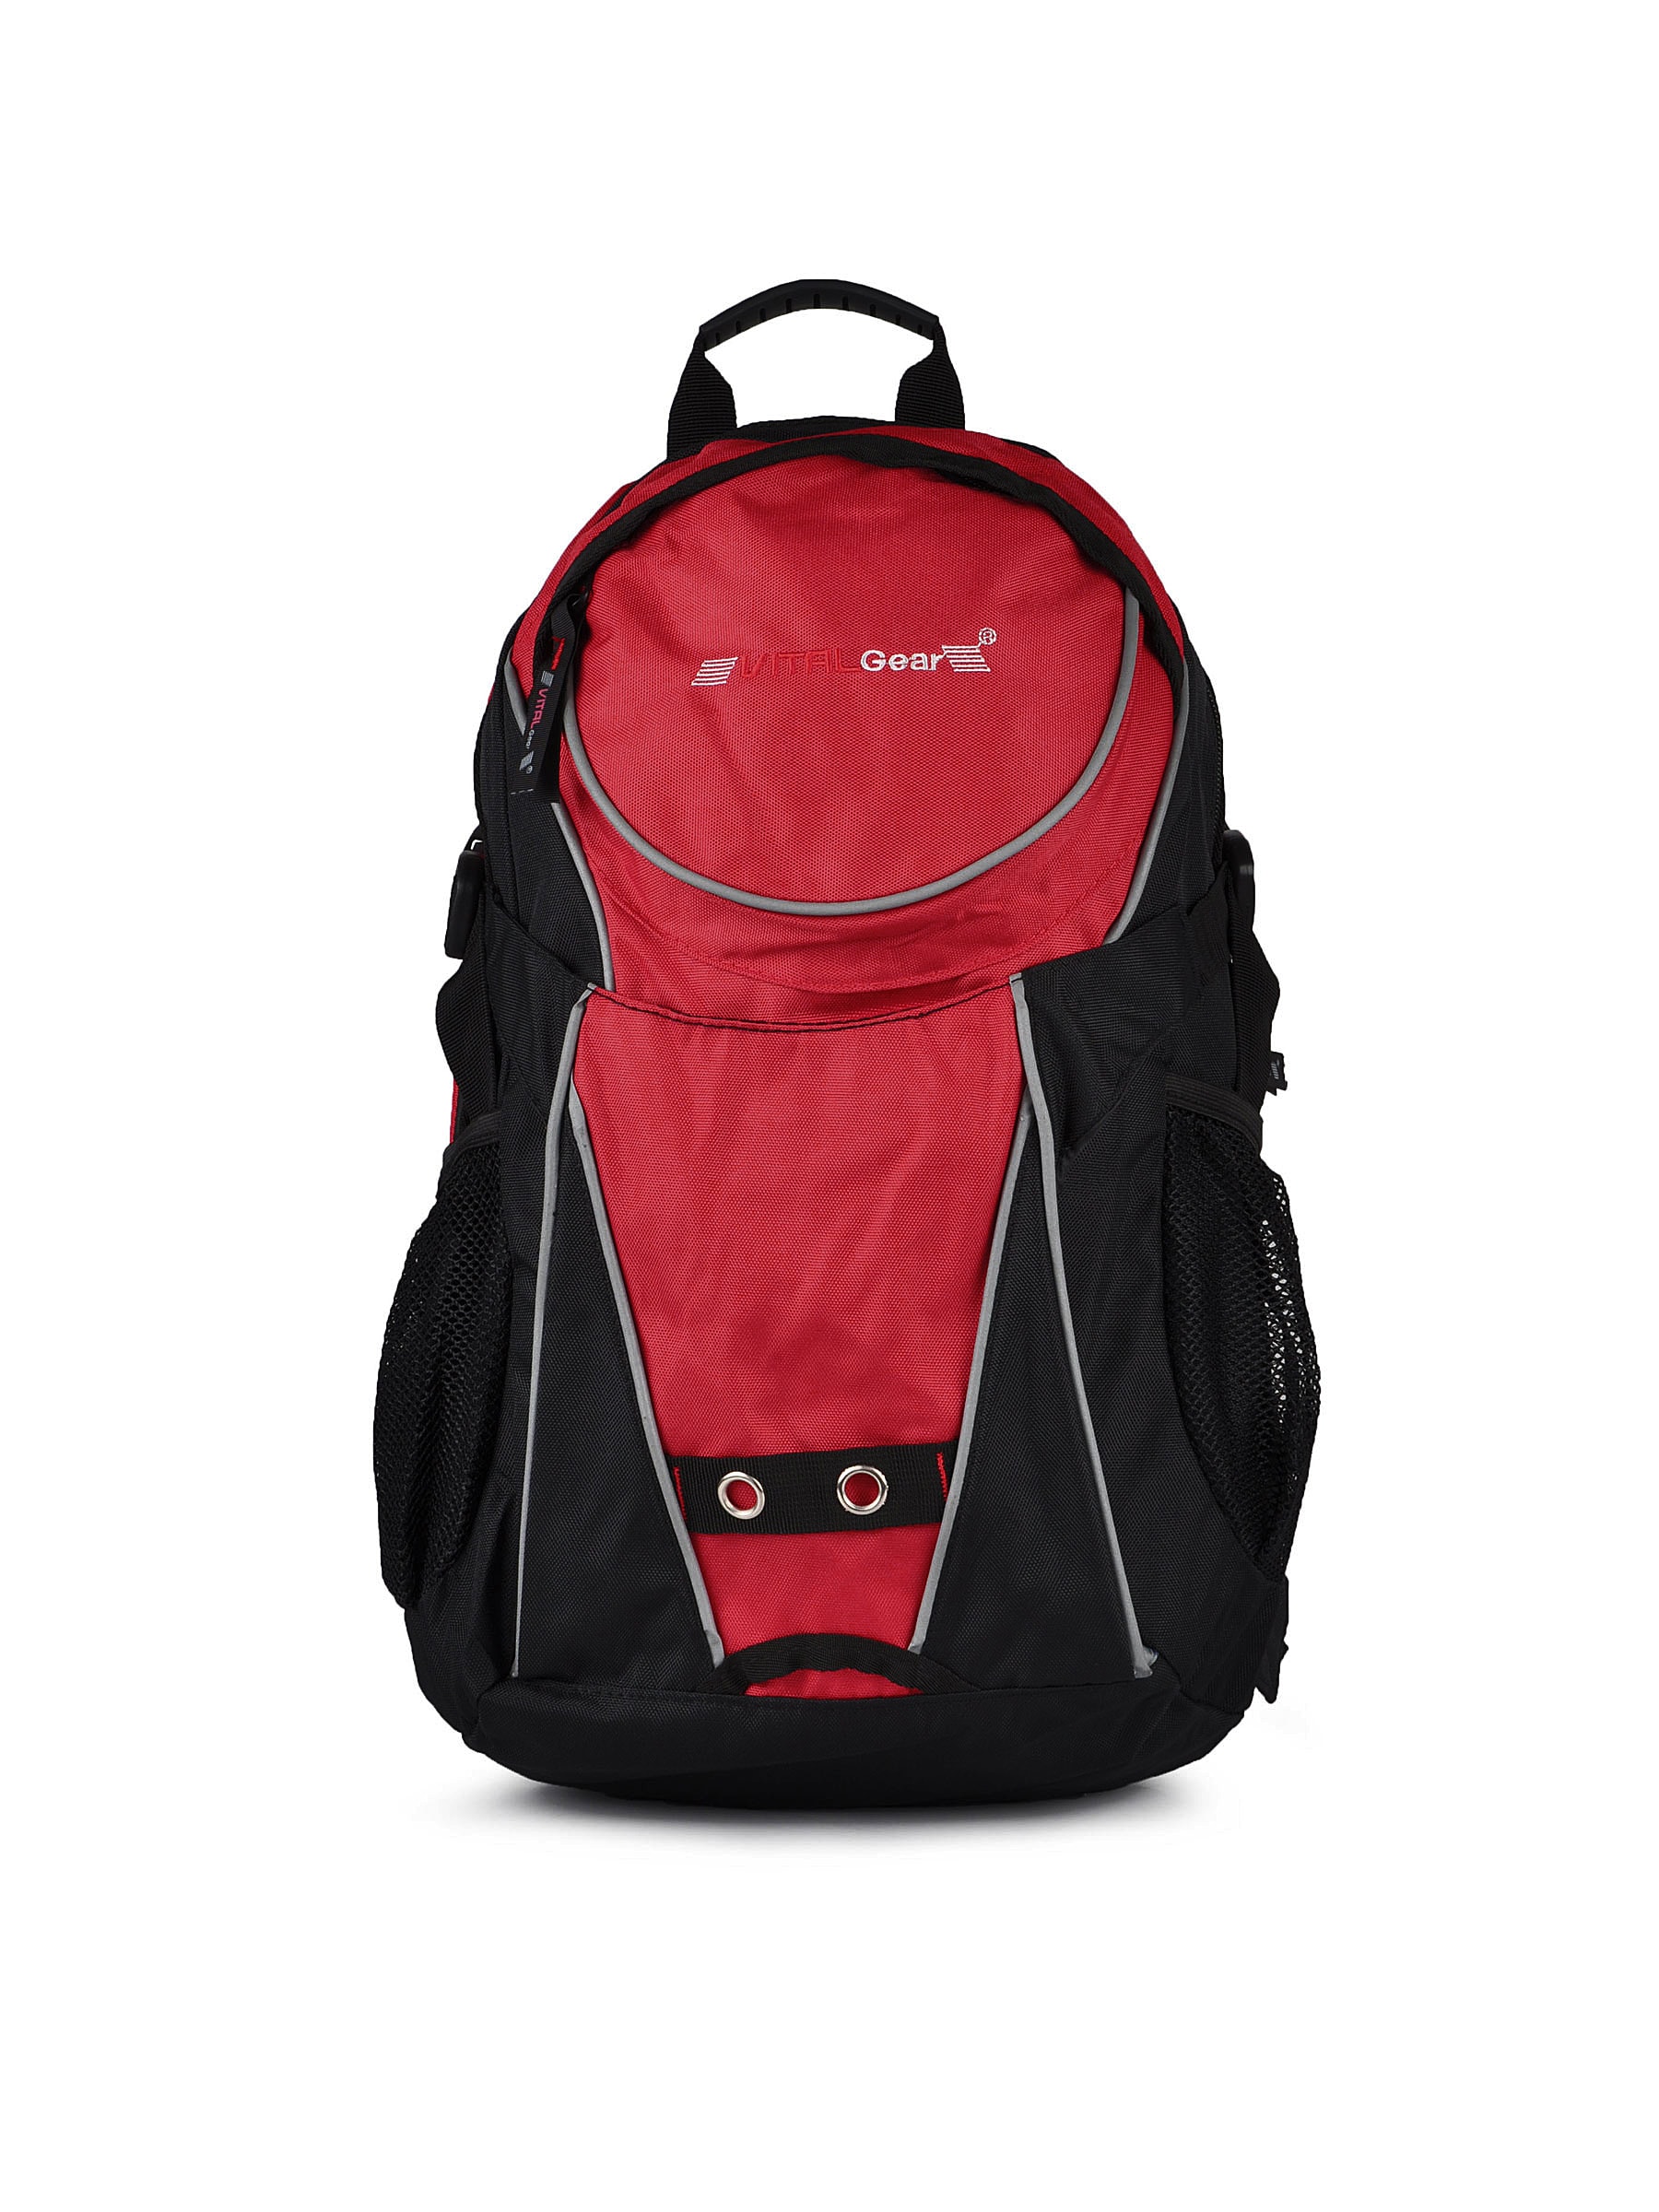 Vital Gear Unisex Black Backpack